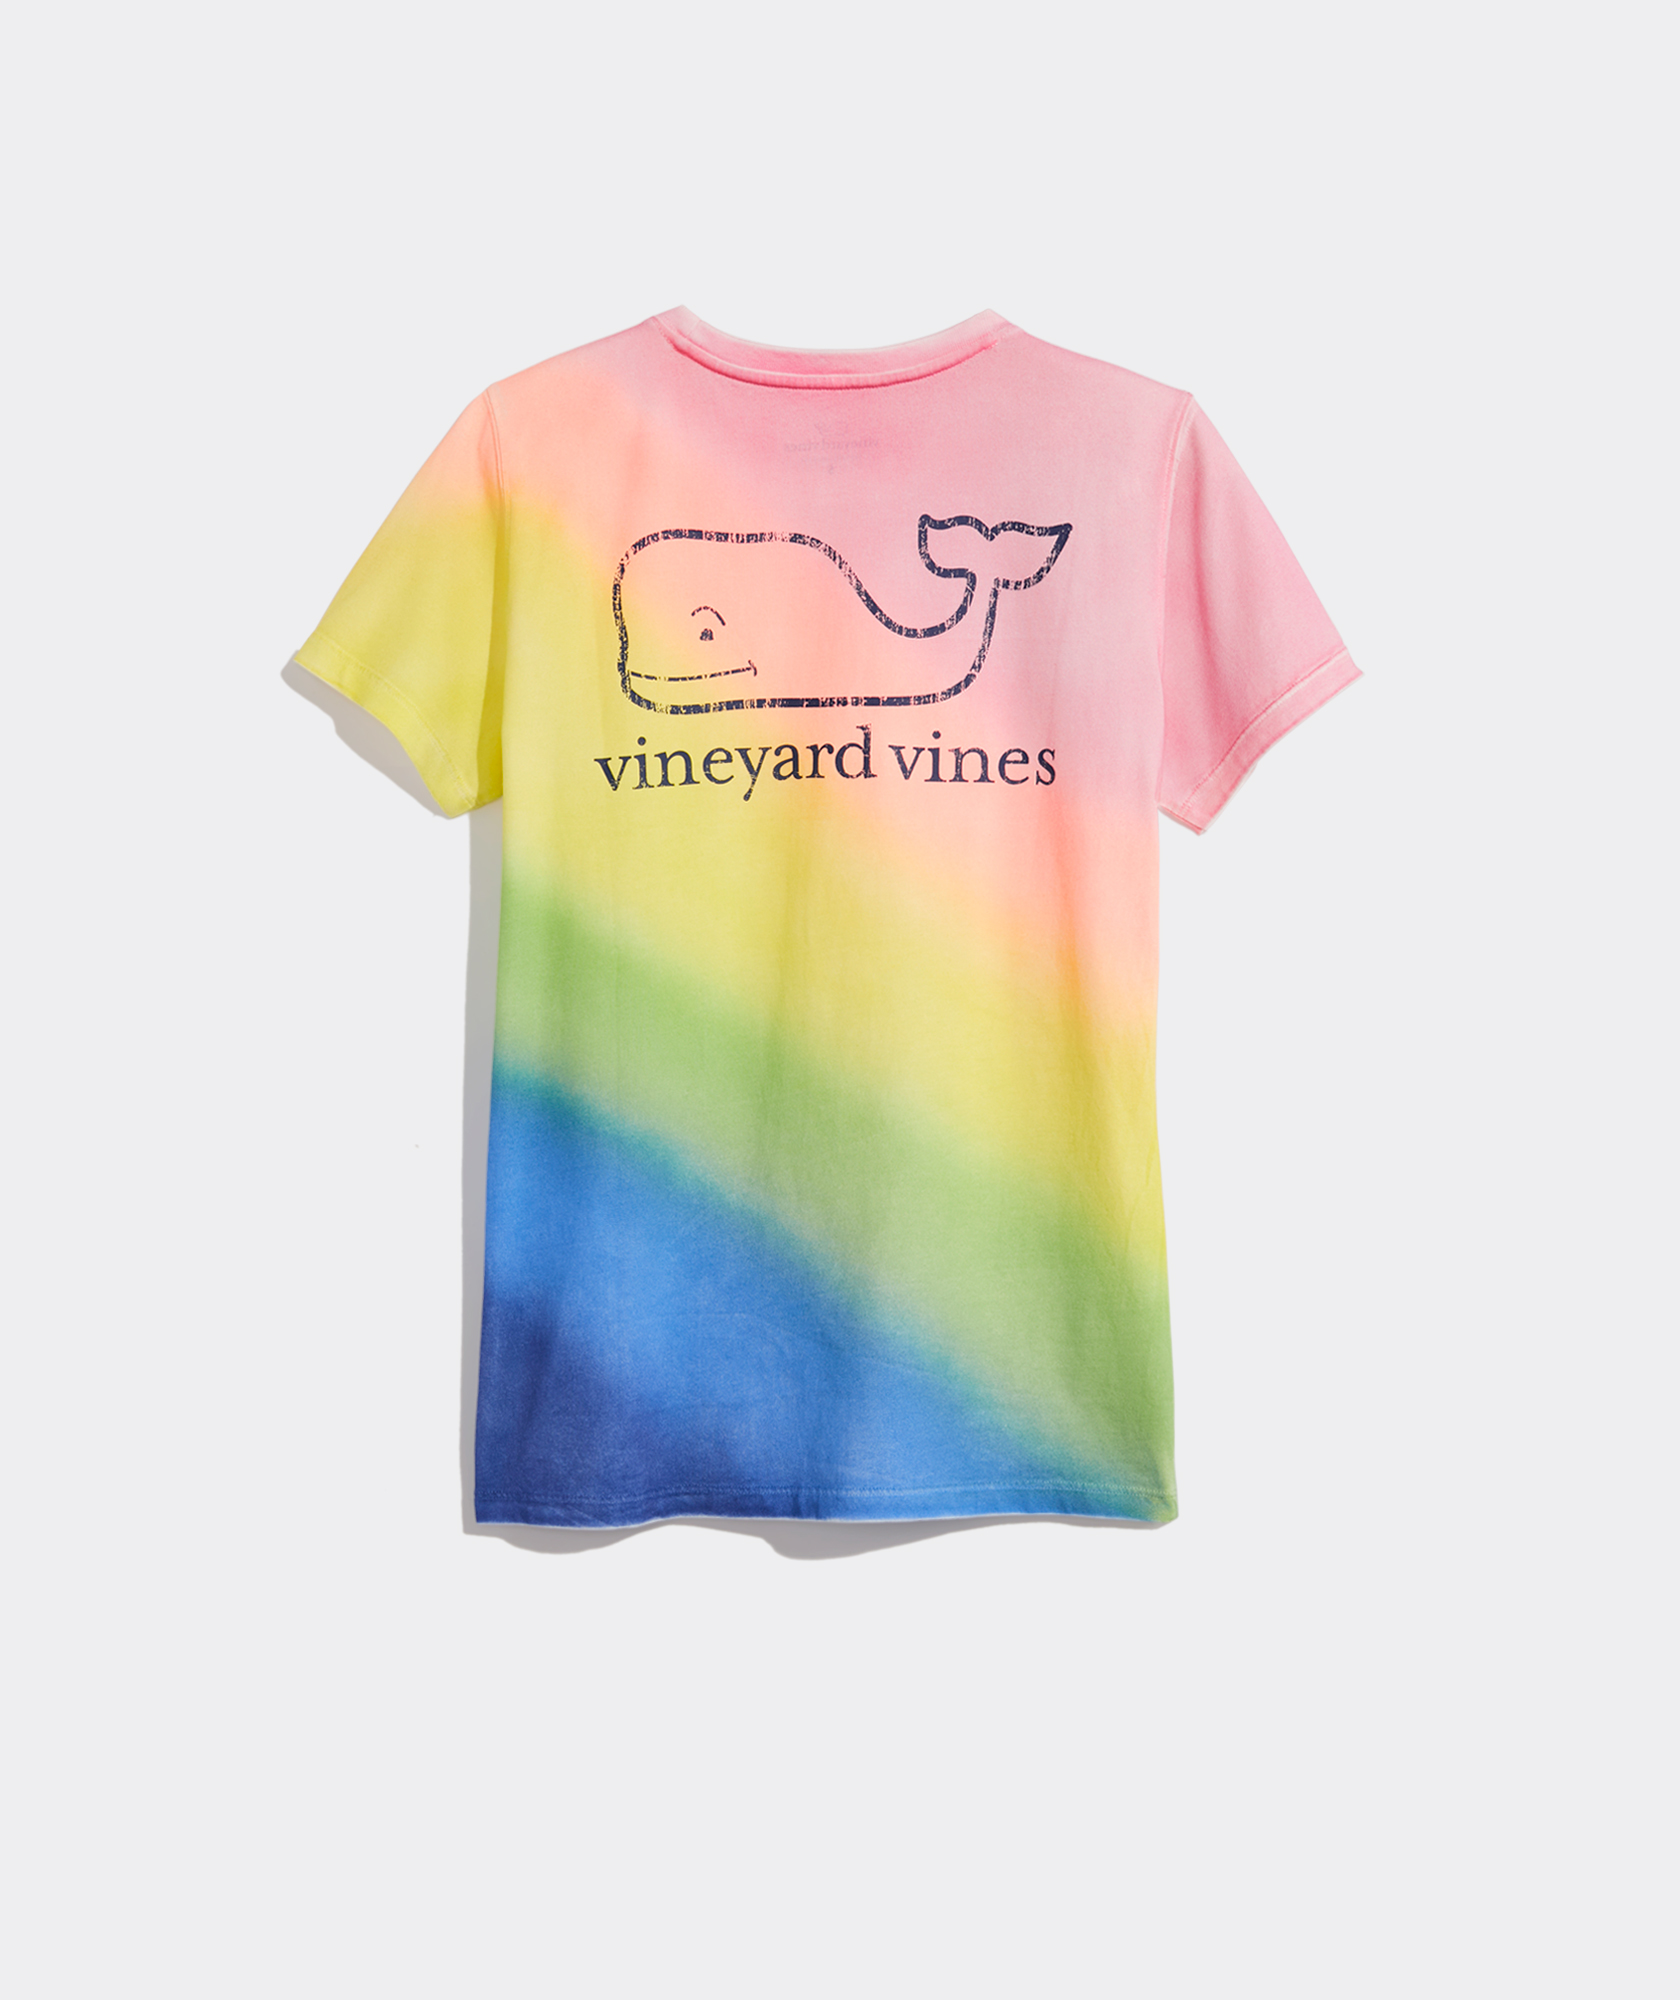 Vineyard Vines Girls S/S White Cap Vintage Whale Graphic T-Shirt 